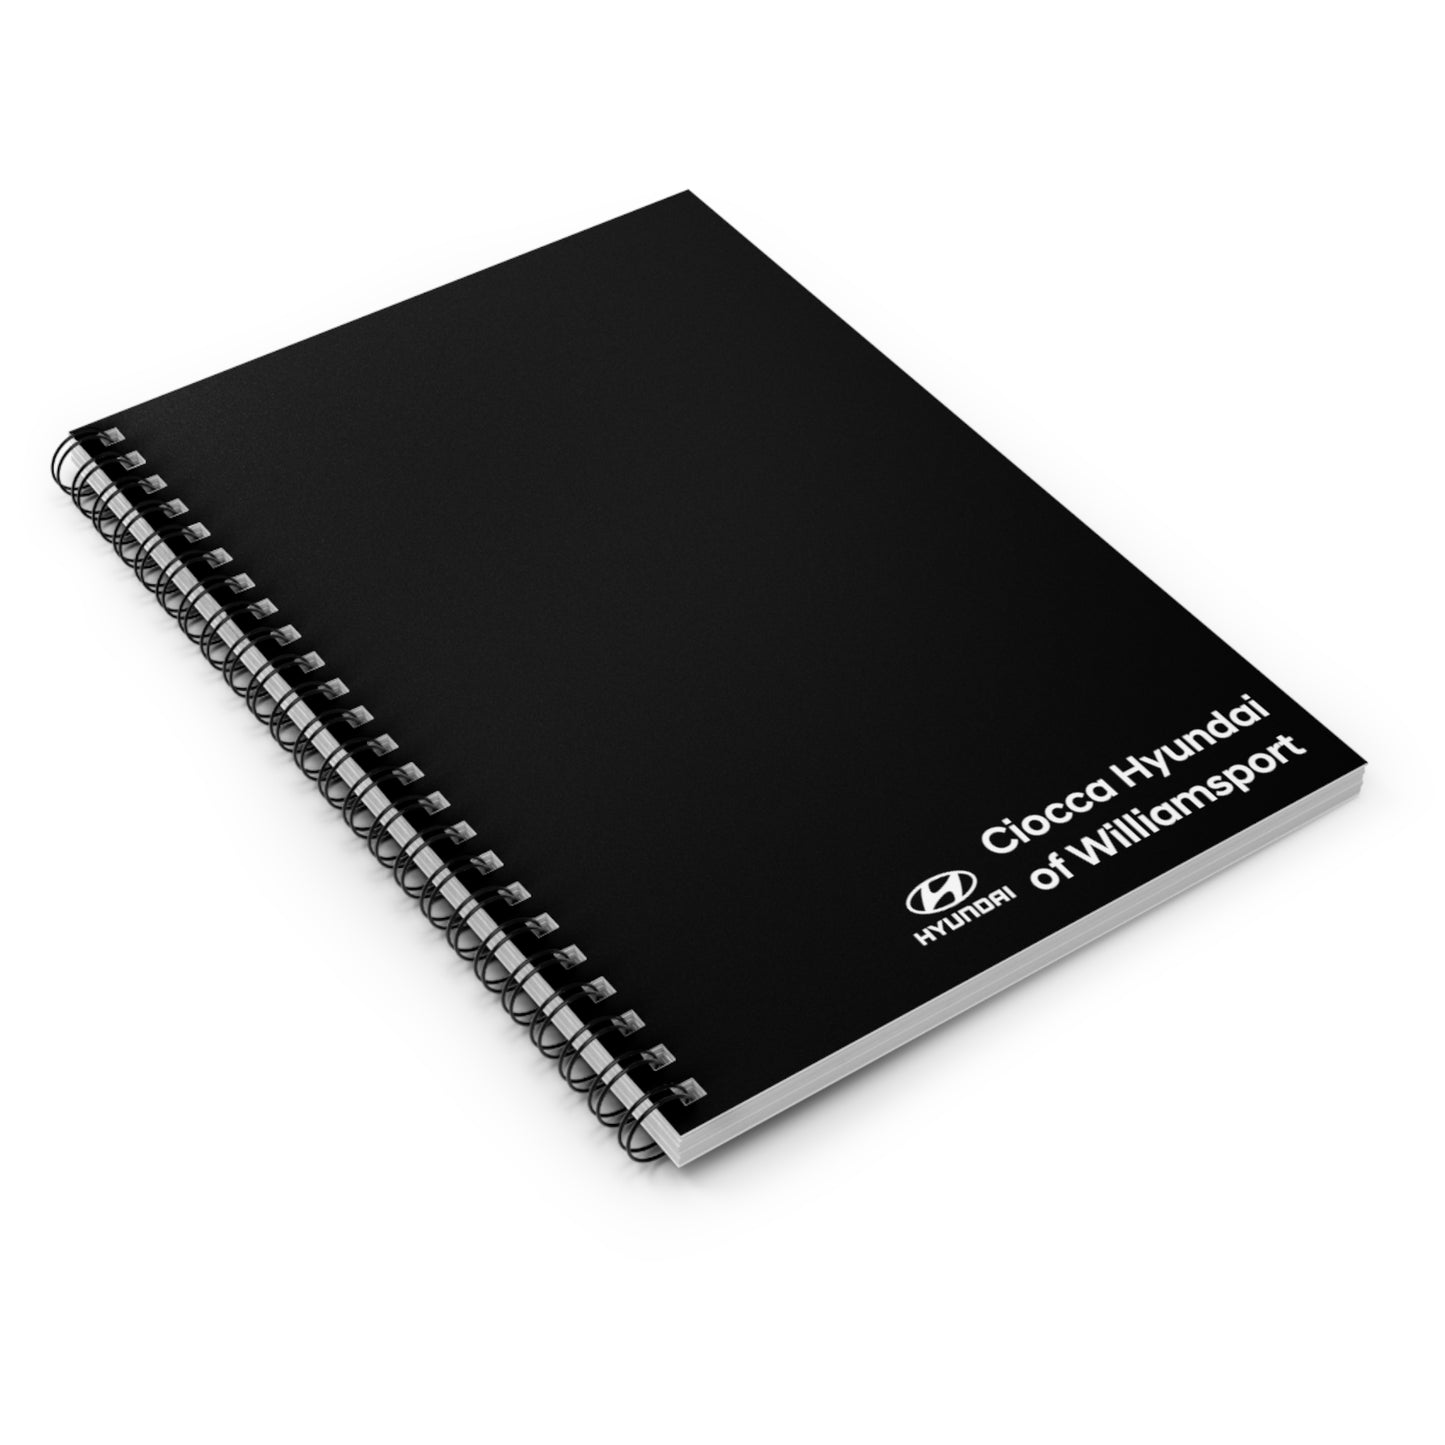 Spiral Notebook (ruled line) - Hyundai Williamsport